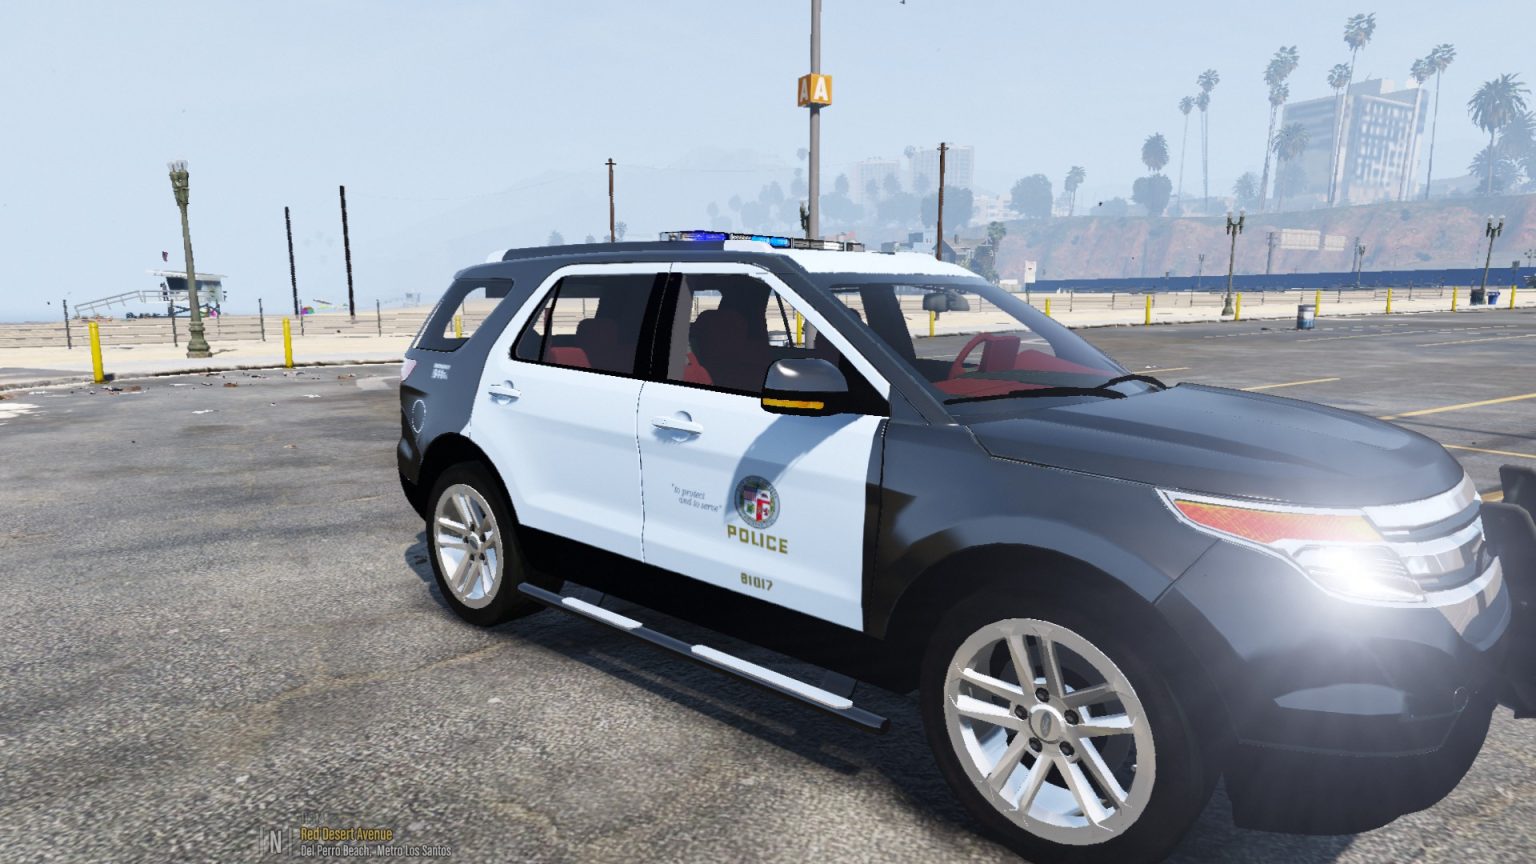 [ELS] 2014 Ford Explorer LAPD 1.0 – GTA 5 mod